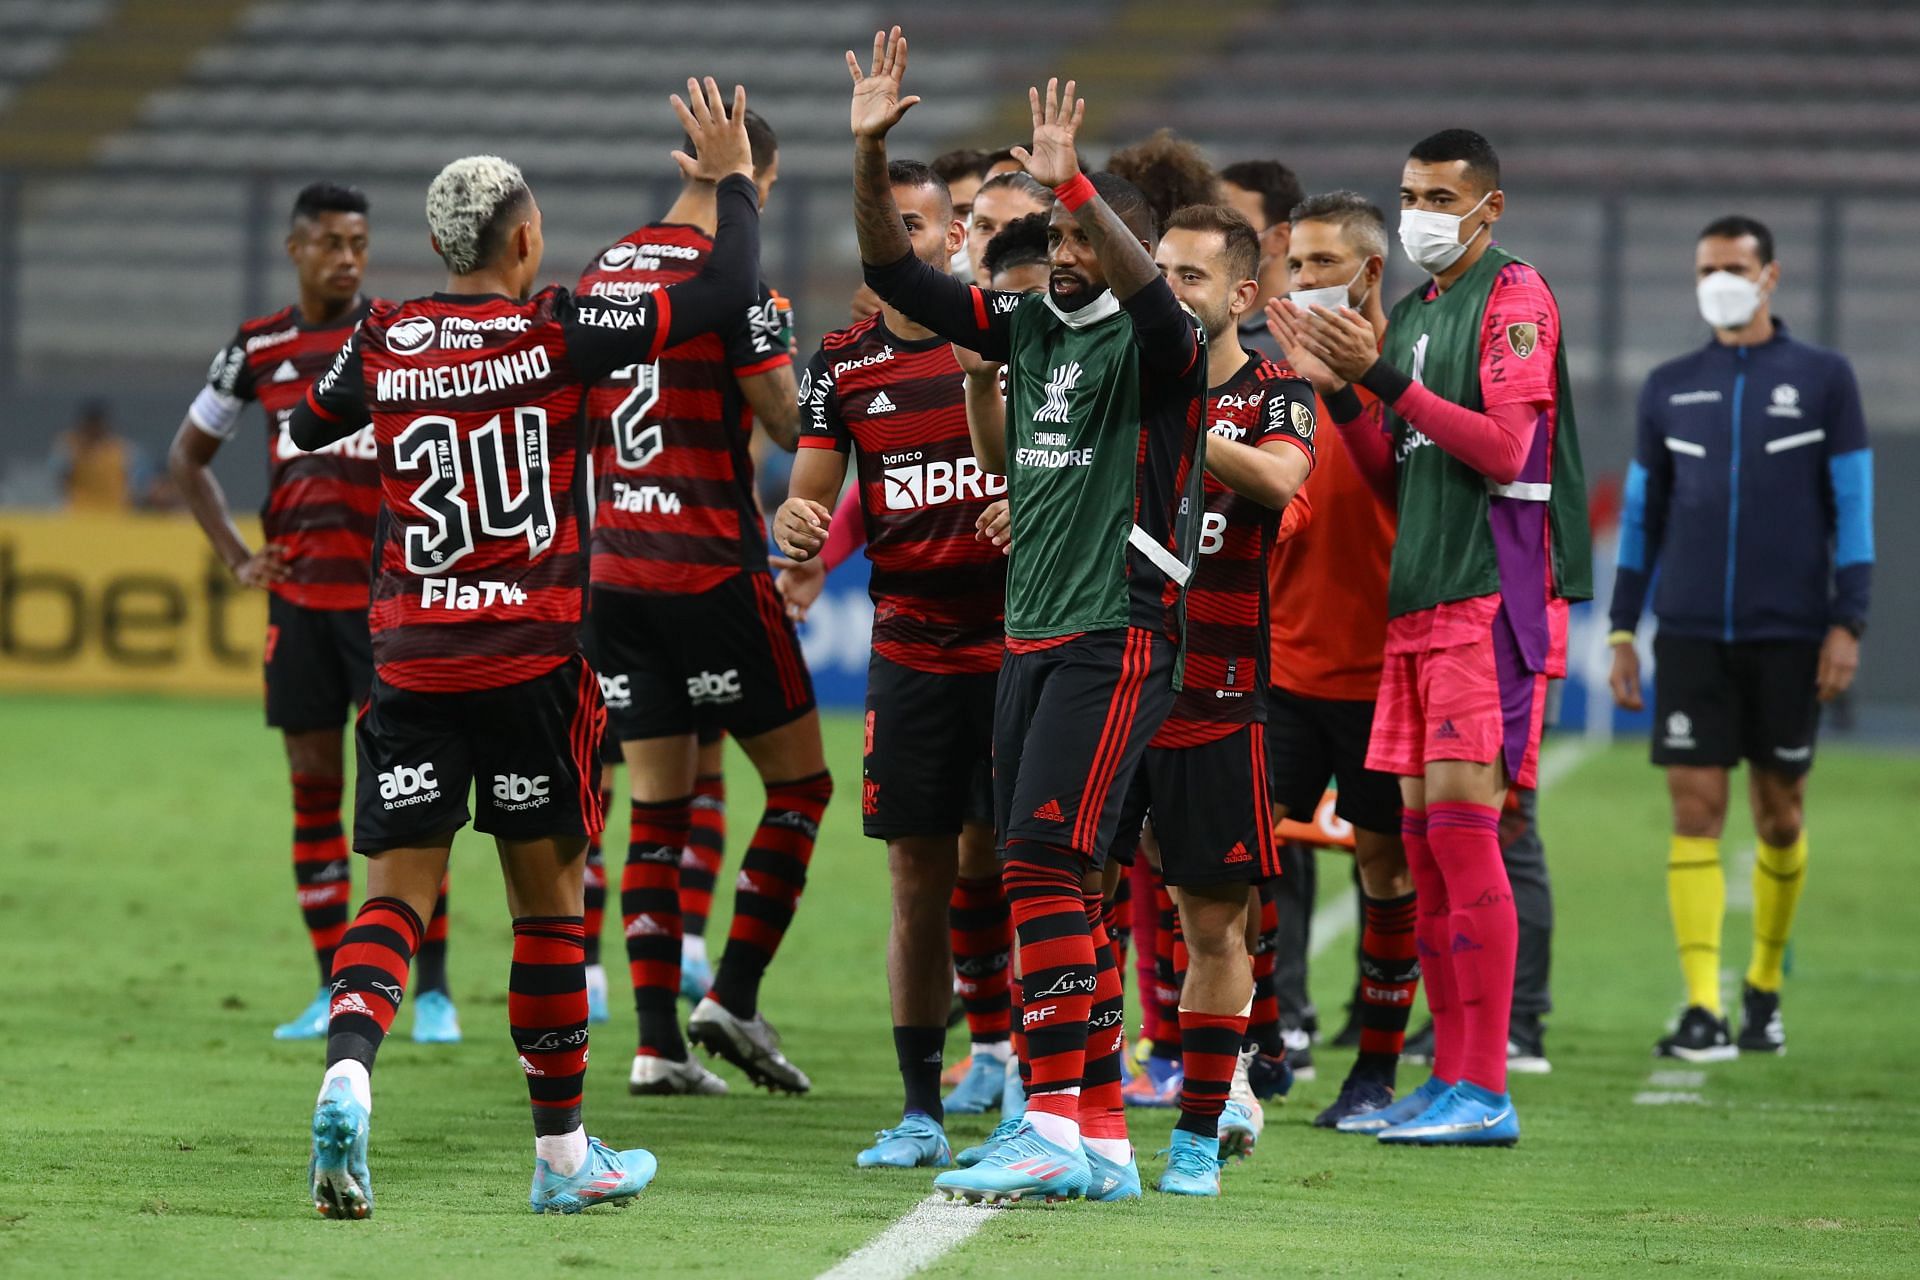 Flamengo will face Universidad Catolica on Thursday